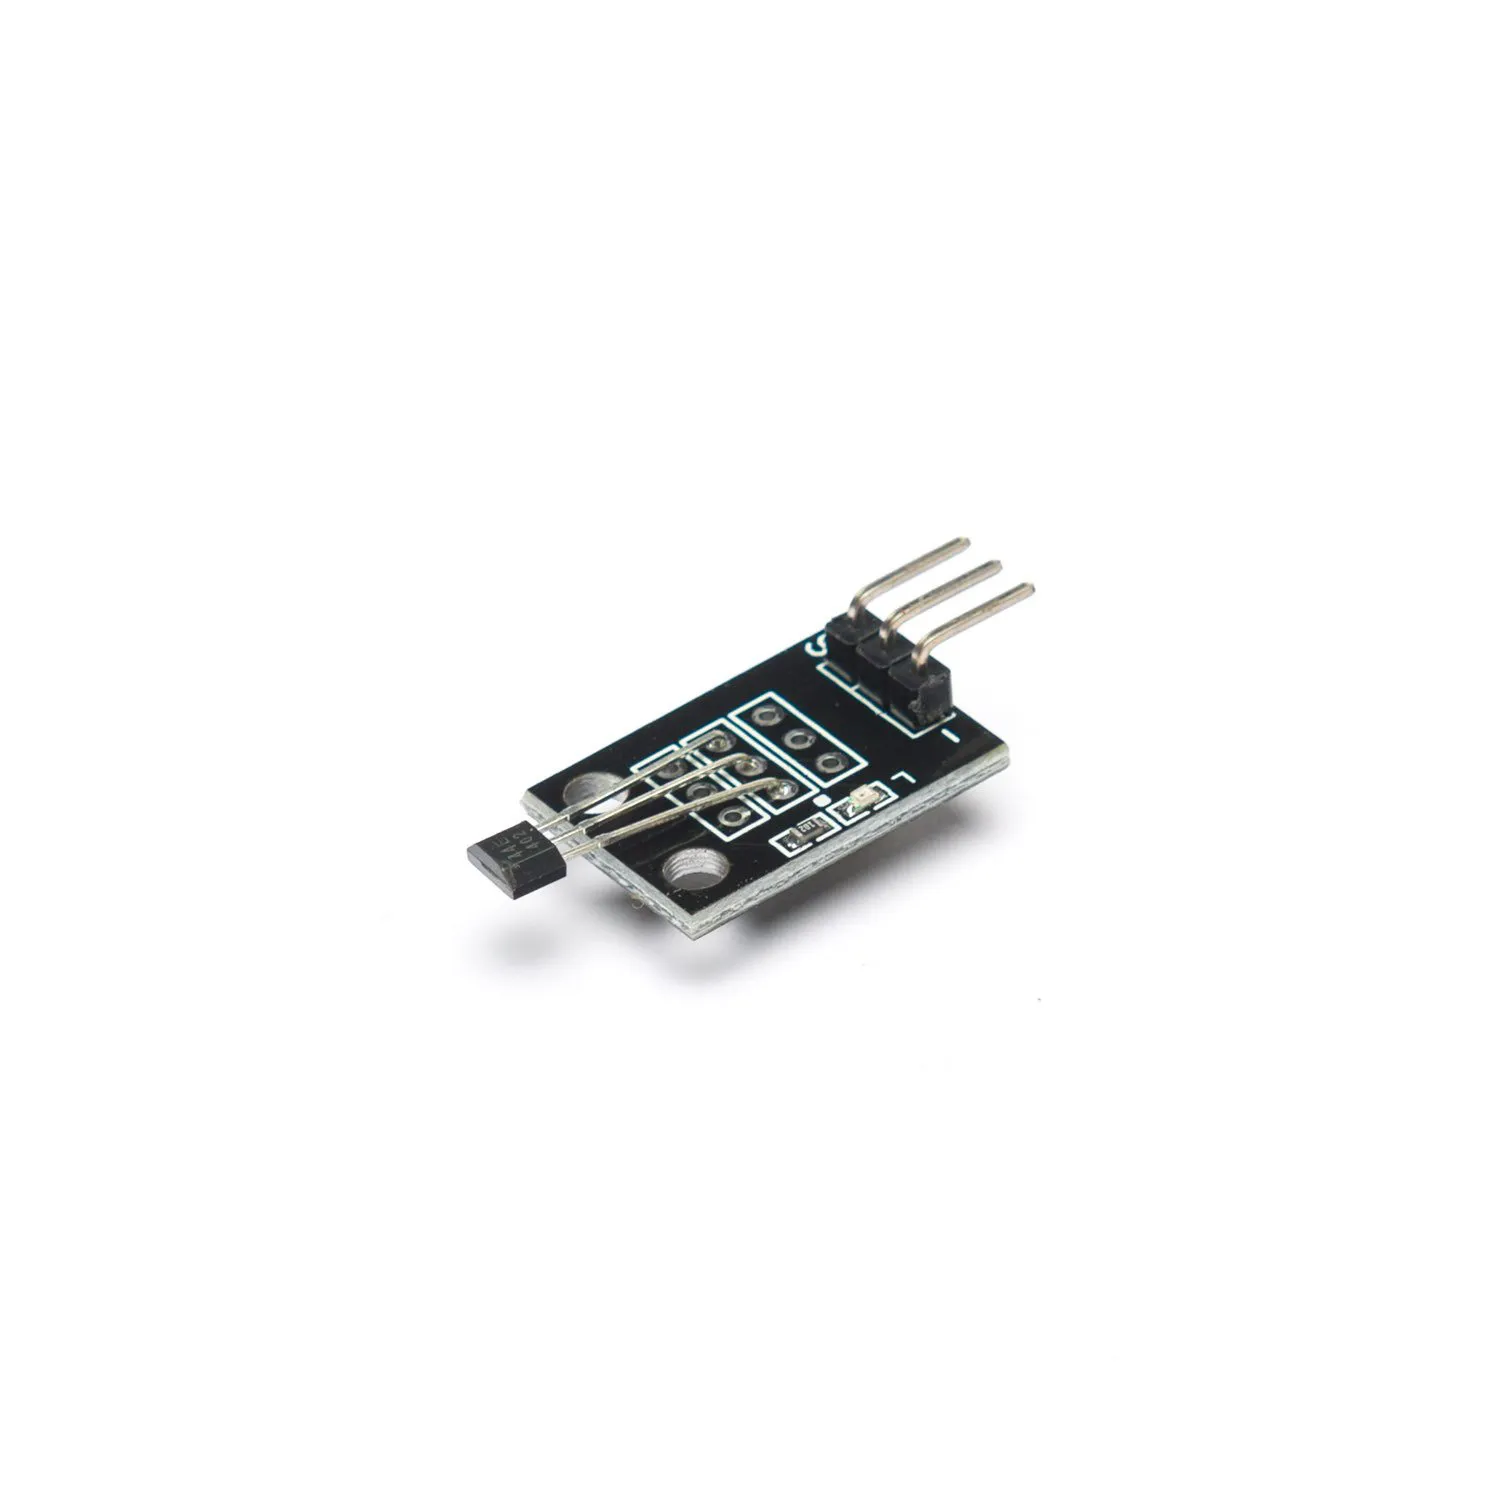 Photo of Analog Hall Effect Sensor Module for Arduino